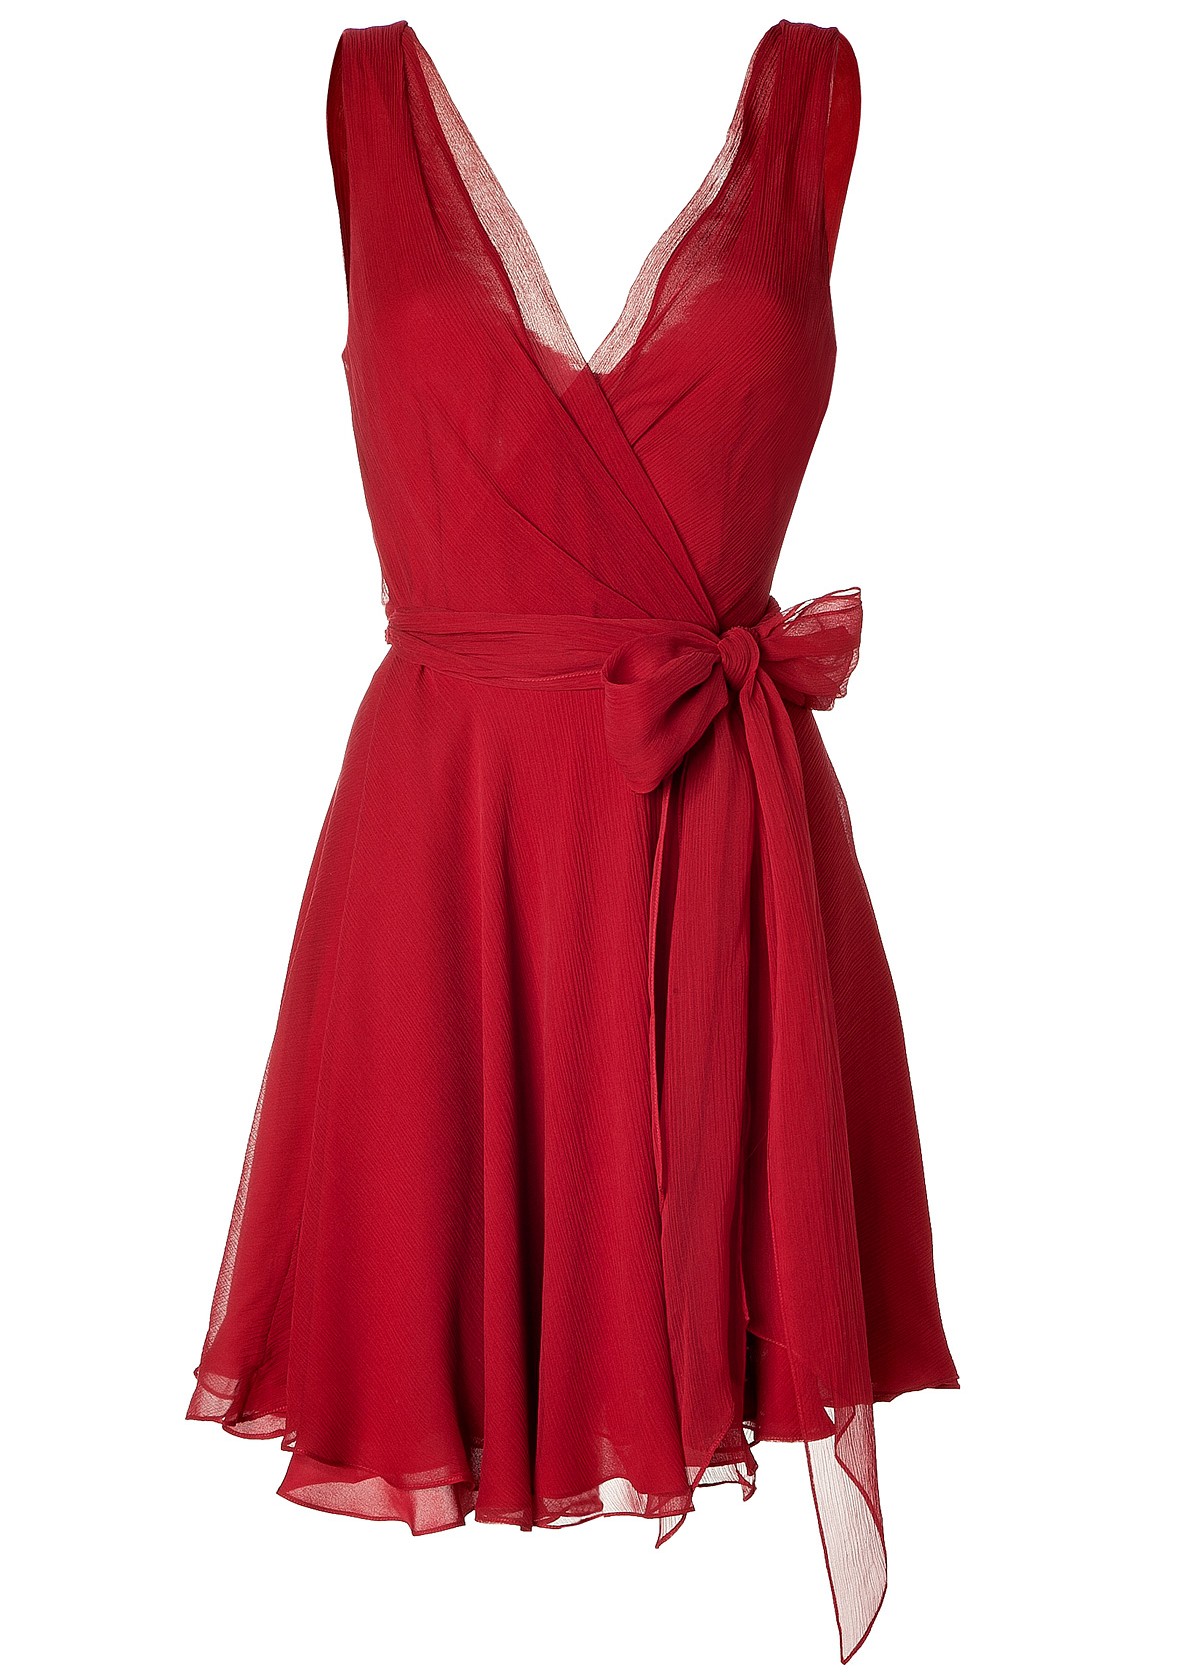 Samba Red Bridesmaids Dress from StyleBop